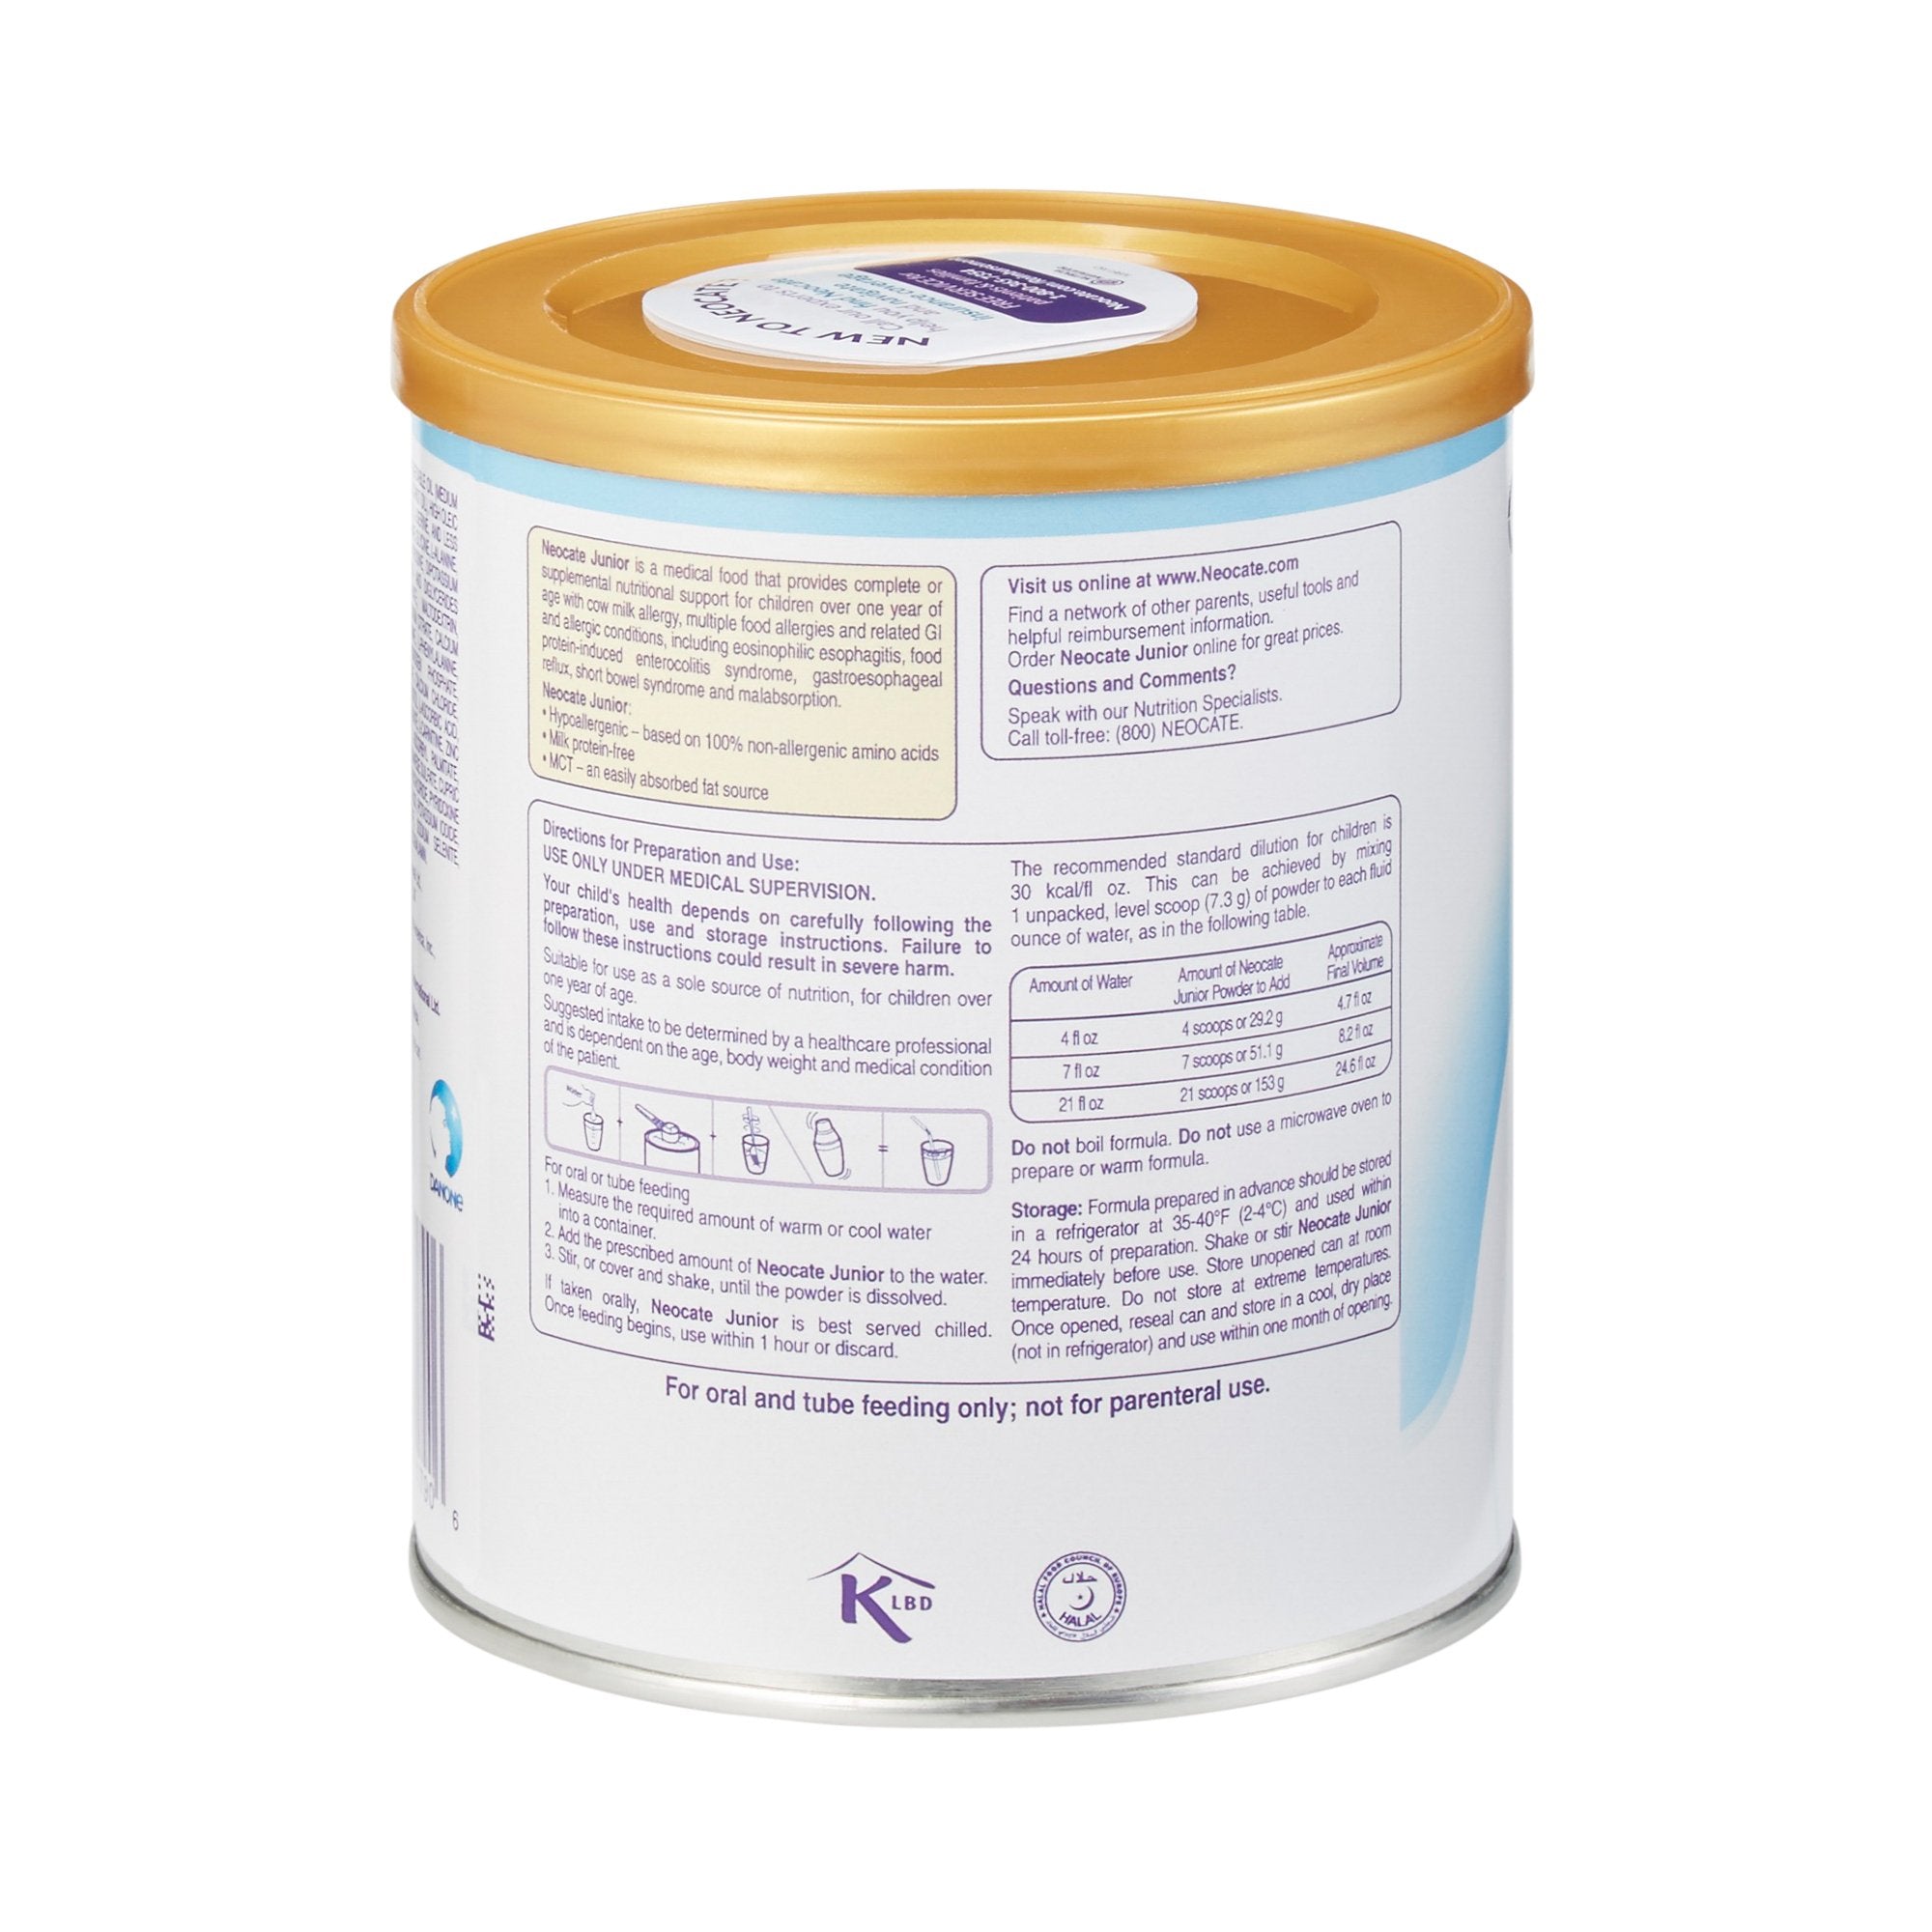 Pediatric Oral Supplement Neocate Junior 14.1 oz. Can Powder Amino Acid Food Allergies